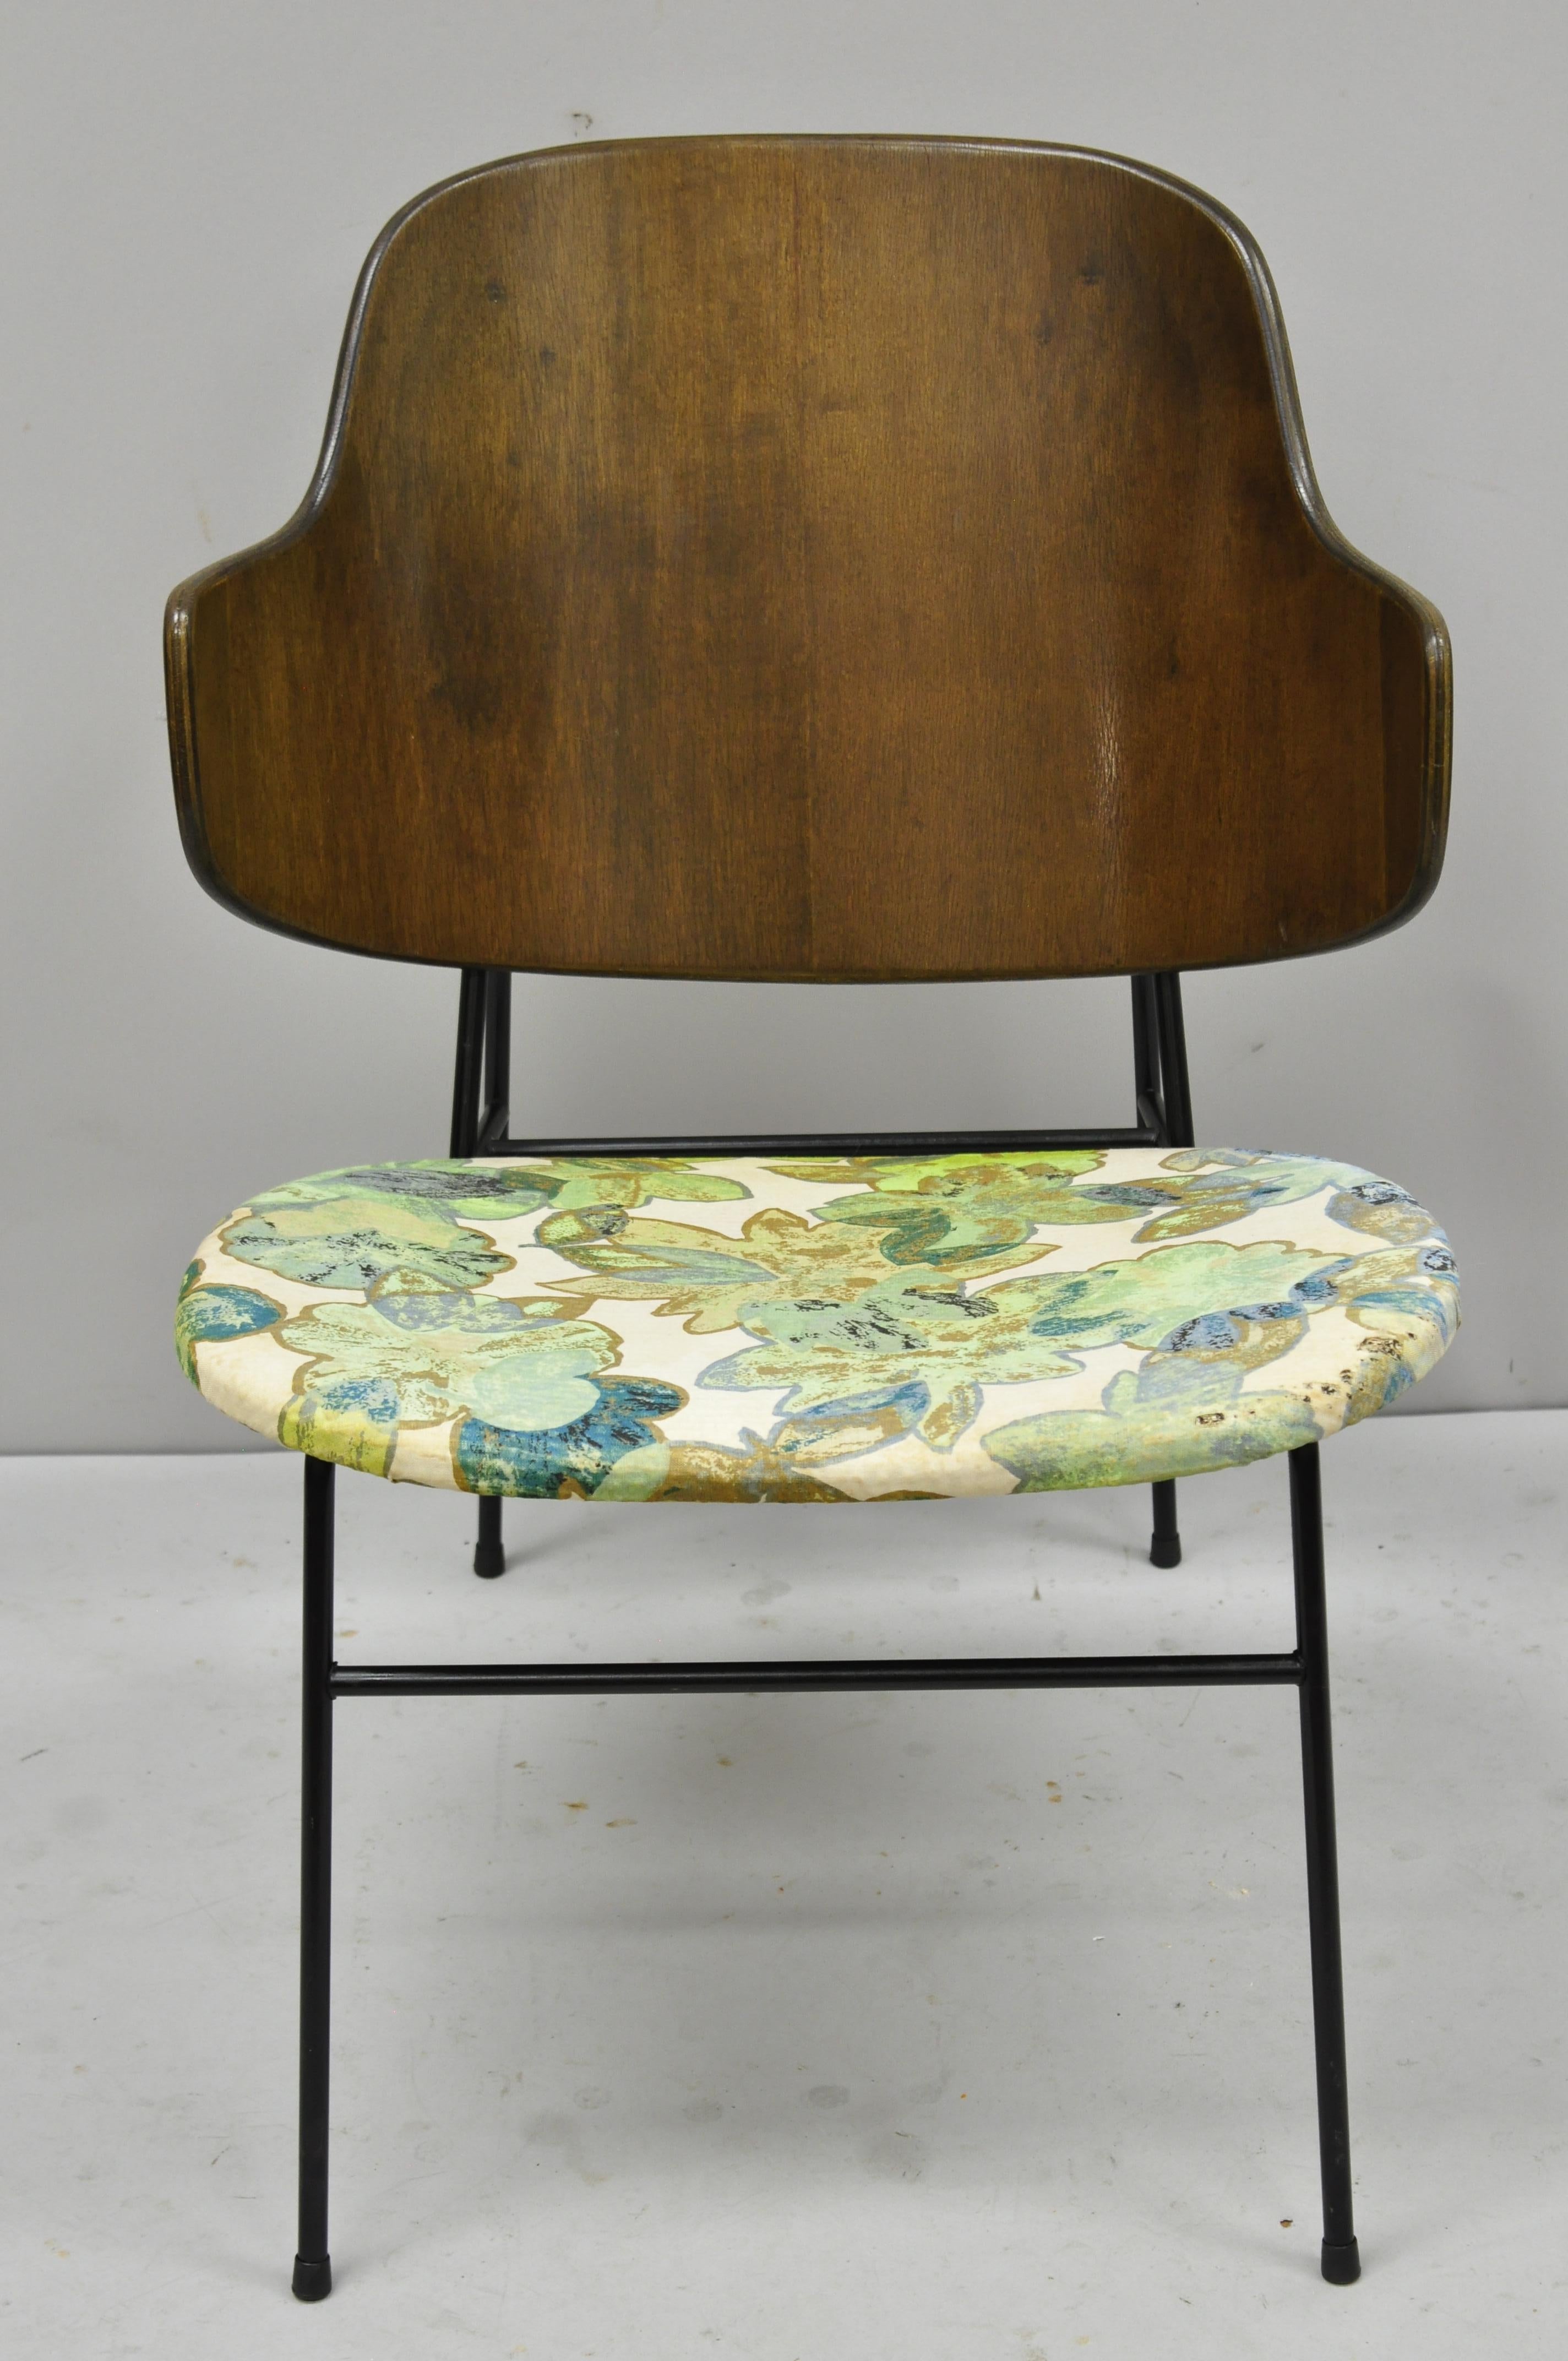 Vintage midcentury Danish modern Ib Kofod Larsen Selig Penguin chair. Item features bent wood back, wrought iron frame, original stamp, clean modernist lines, sleek sculptural form, circa mid-20th century. Measurements: 29